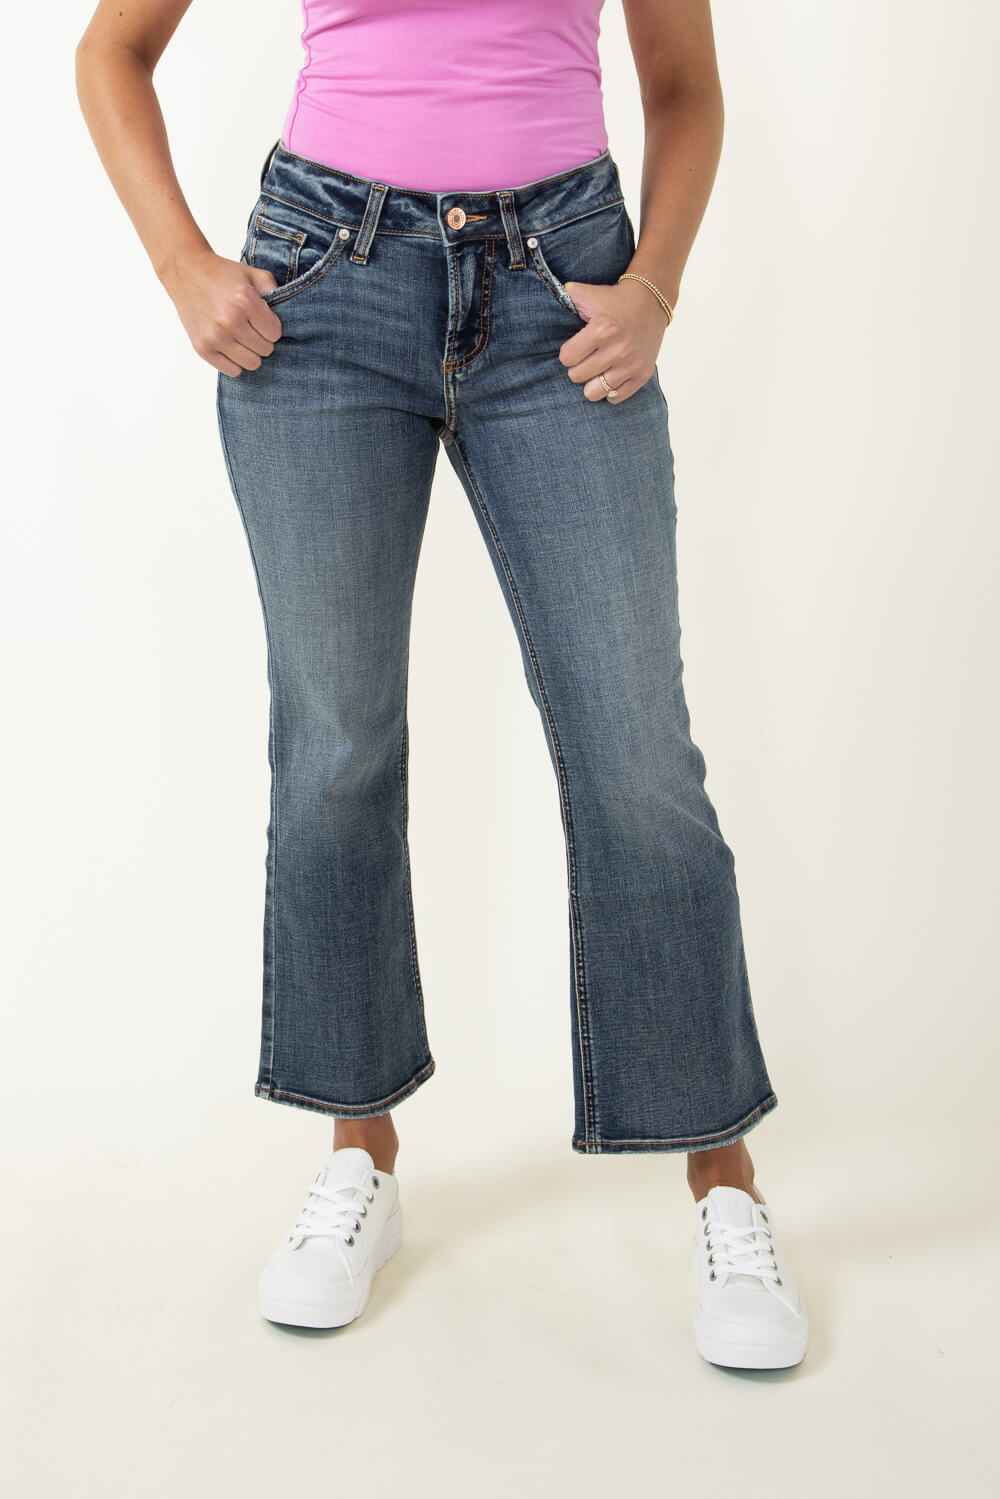 Silver Jeans 26” Suki Kick Flare Jeans for Women